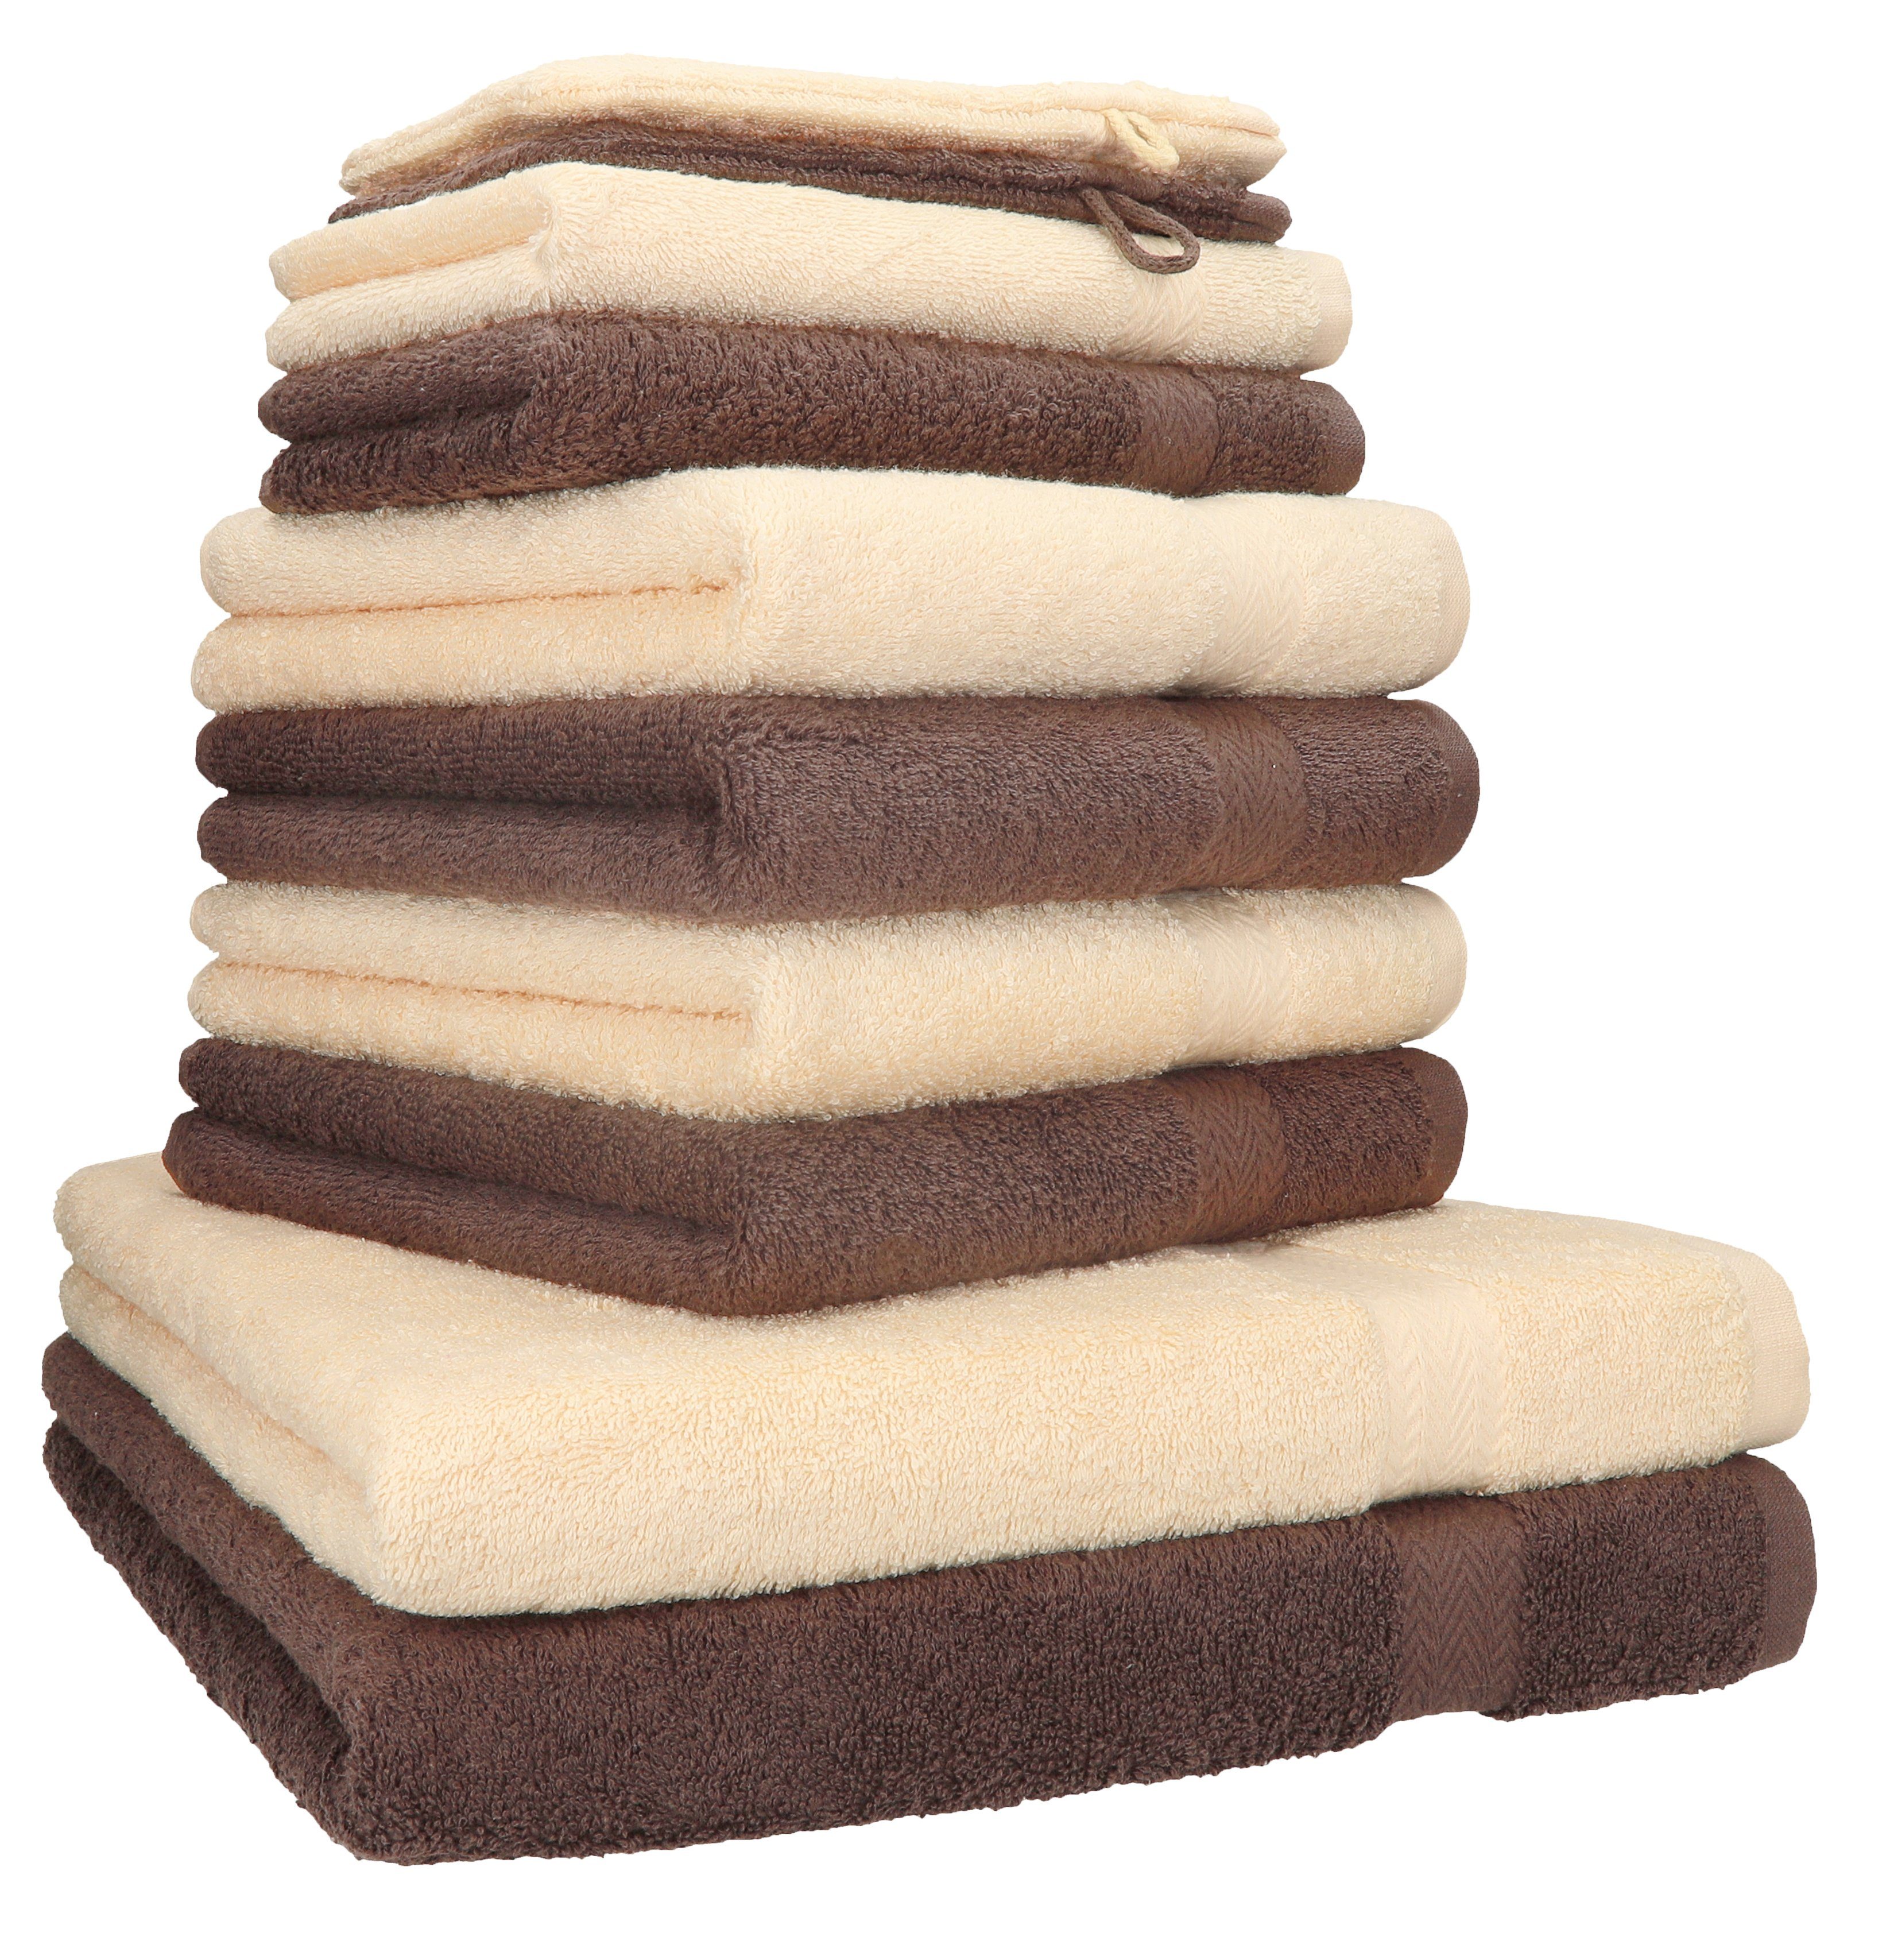 Betz Handtuch Set 10-TLG. Handtuch-Set Premium 100% Baumwolle 2 Duschtücher  4 Handtücher 2 Gästetücher 2 Waschhandschuhe Farbe Nuss Braun & Beige, 100%  Baumwolle, (10-tlg) | Handtuch-Sets